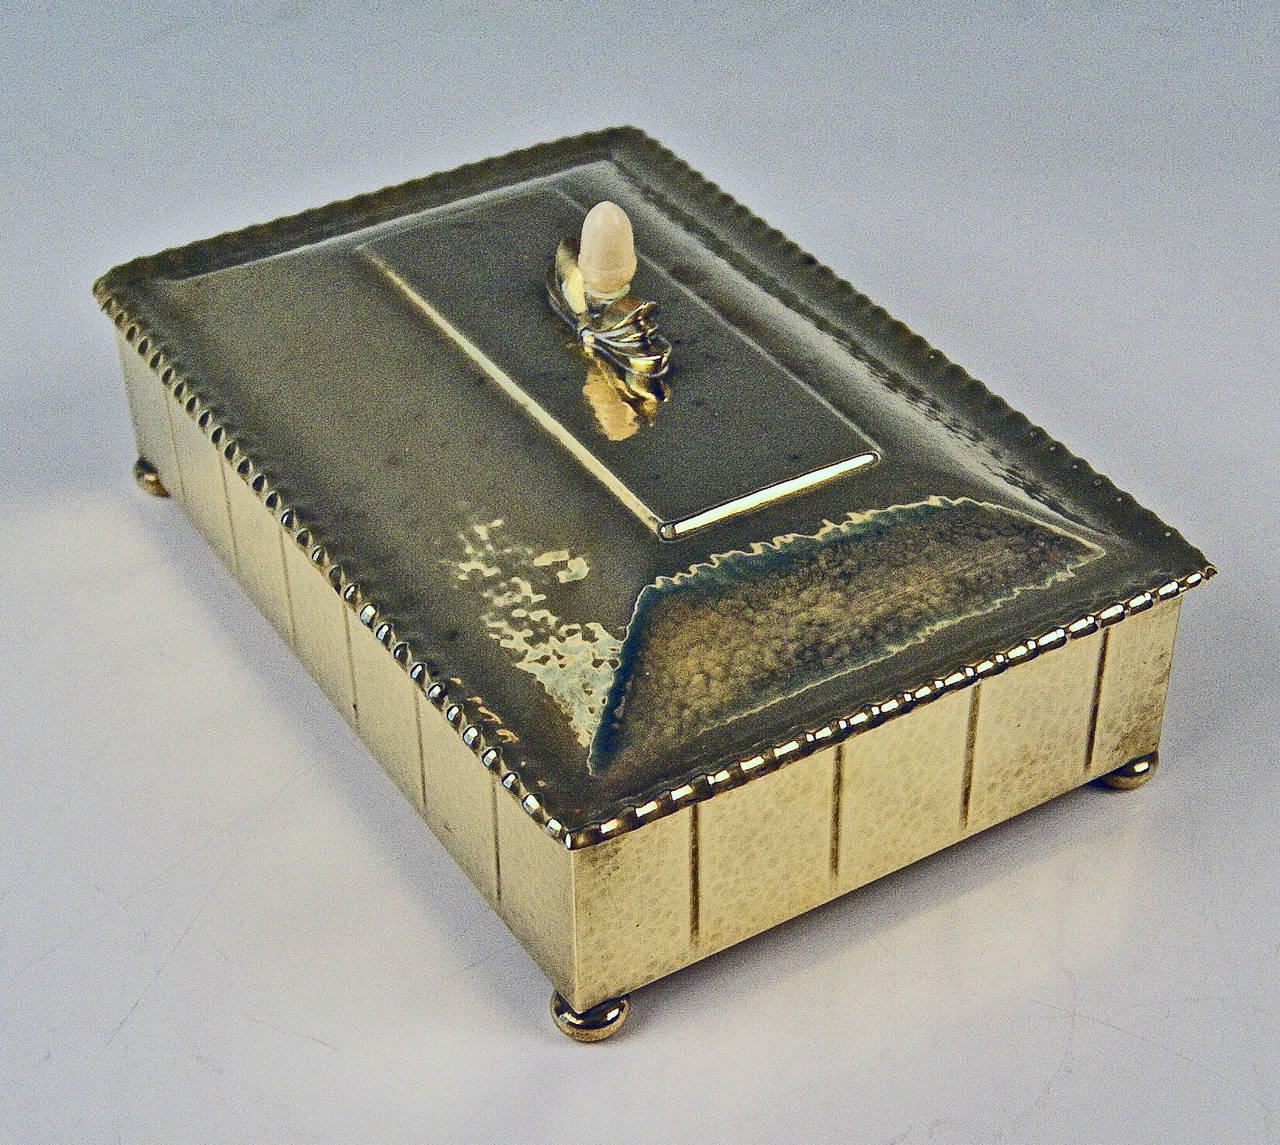 German Brass Art Deco Lidded Gorgeous Box Casket by WMF, circa 1920 - 1925 For Sale 1